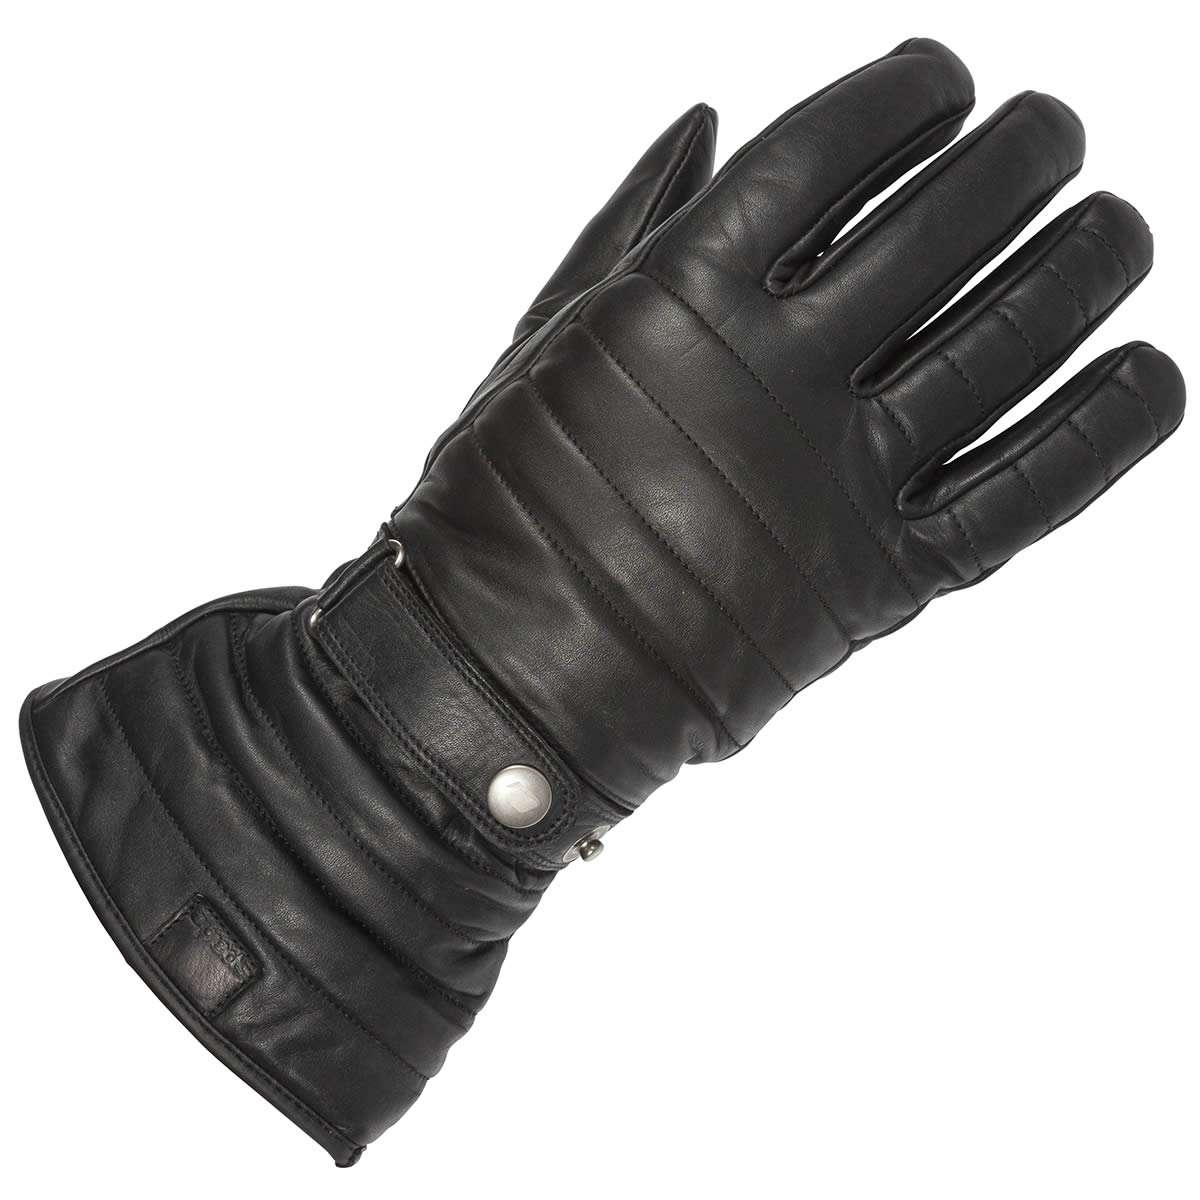 SPADA ICE Motorcycle Glove Waterproof Motorbike Black Leather/Textile Glove 